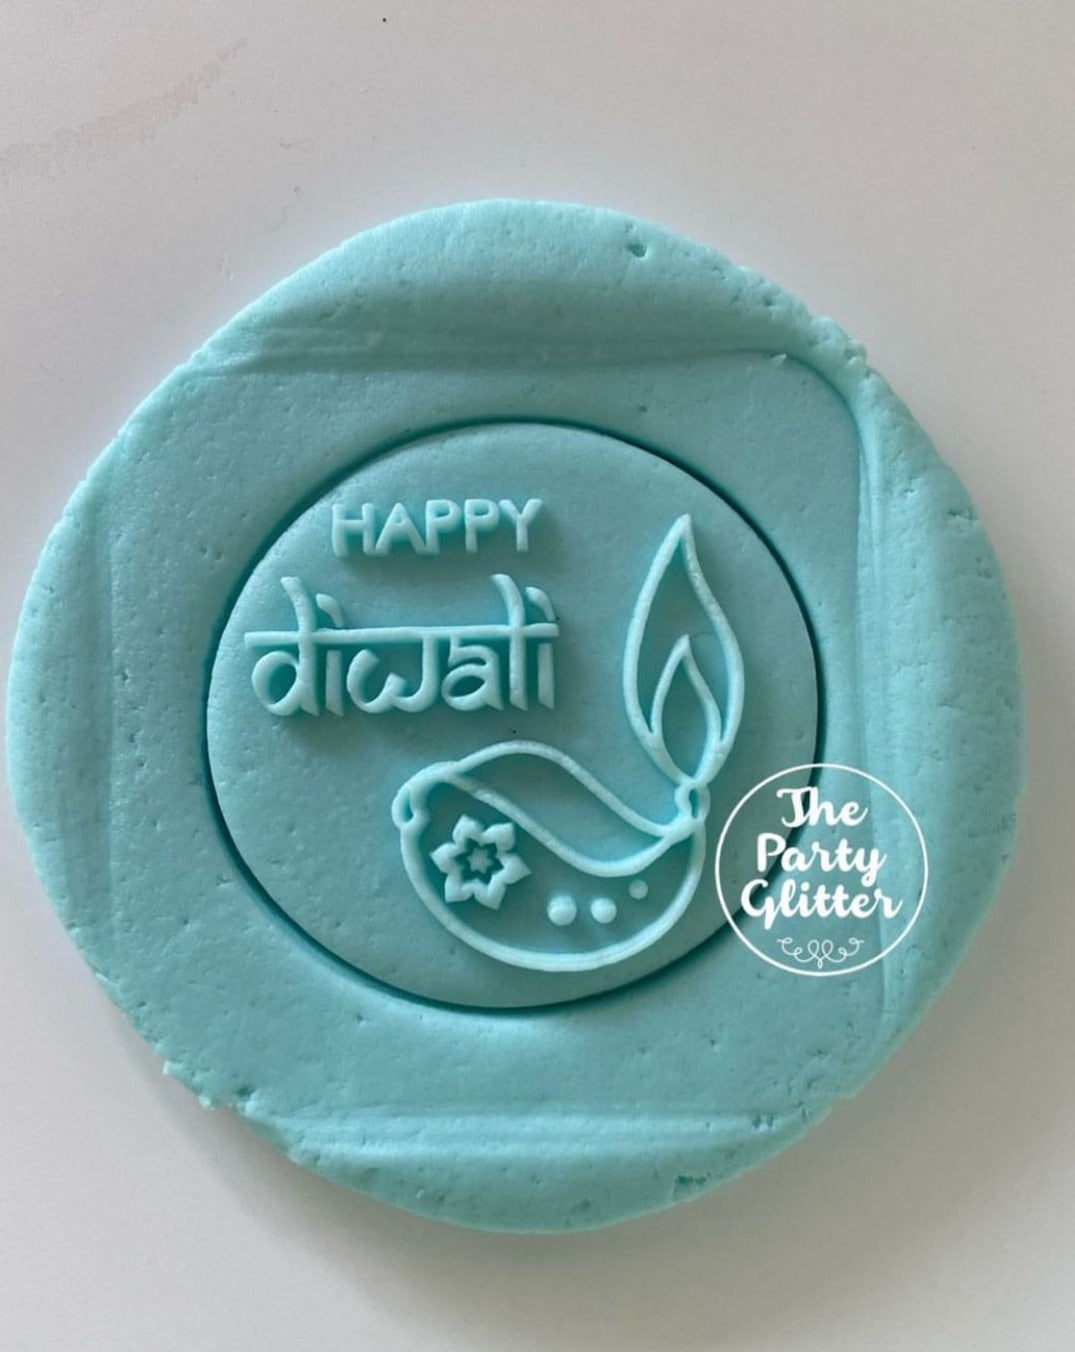 Happy Diwali with Large Diya POPup! Stamp